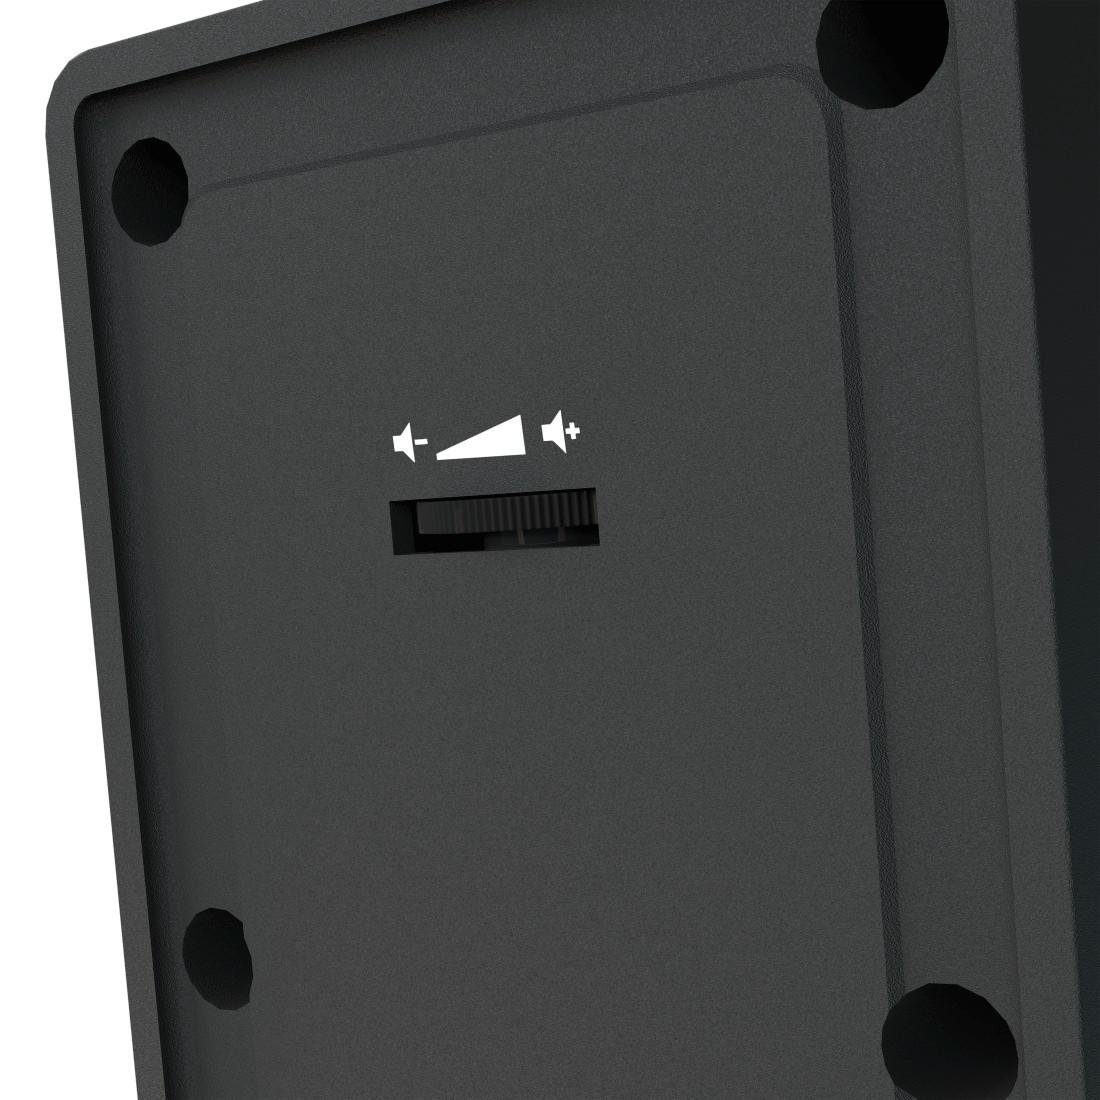 für PC, "Sonic Hama PC-Lautsprecher LS-208", Laptop PC-Lautsprecher Boxen Set